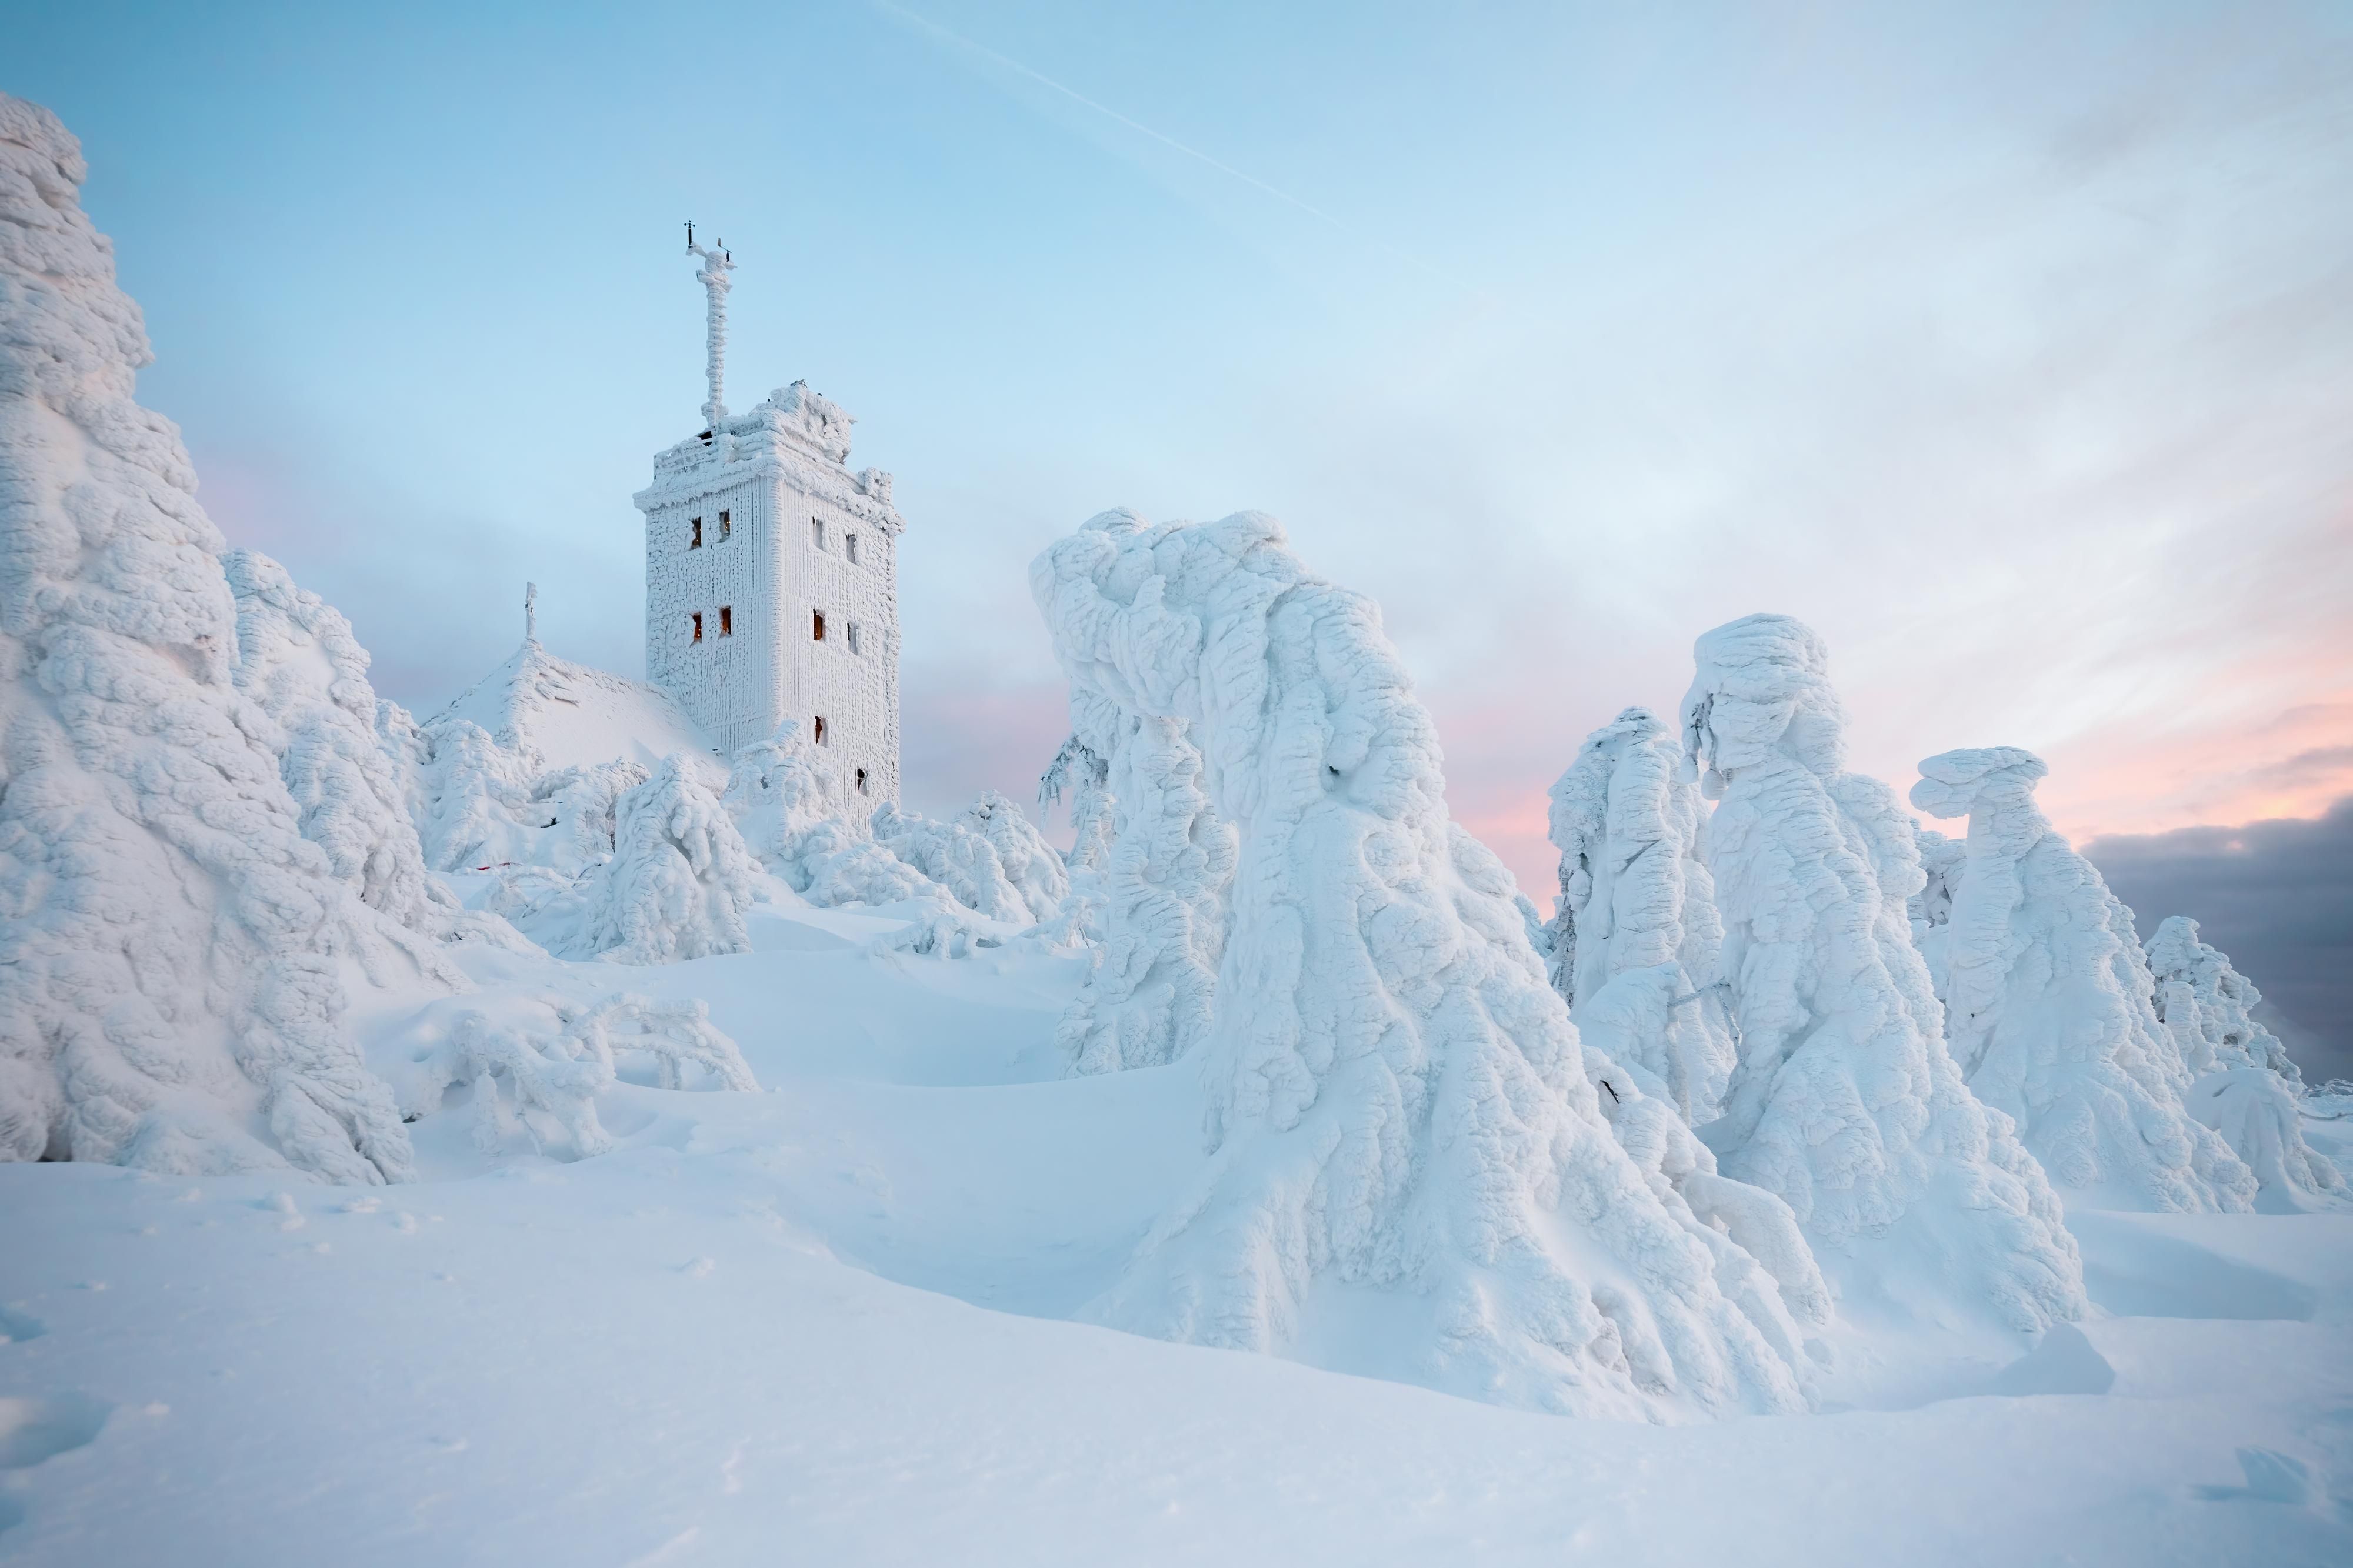 snowy scene showing Fichtelberg weather station